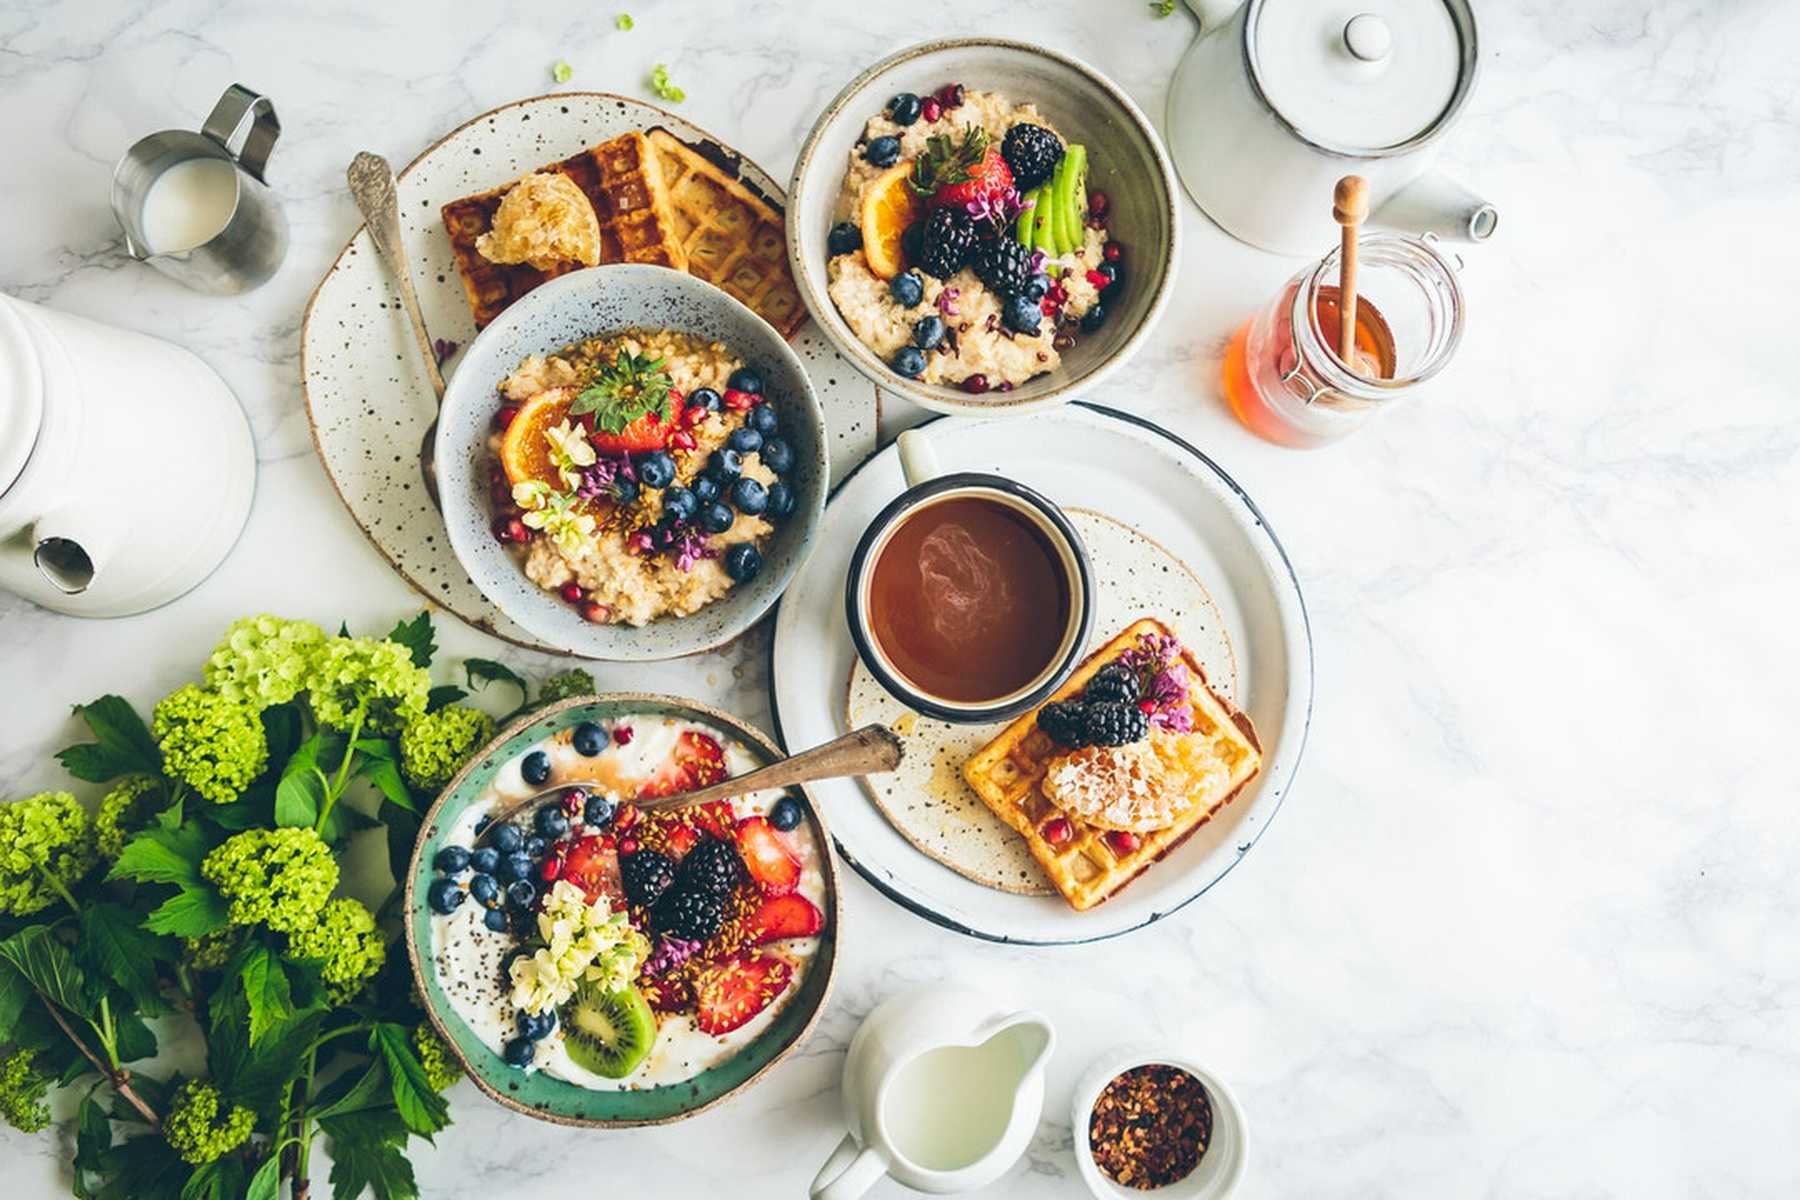 5 Easy Vegan Breakfast Ideas